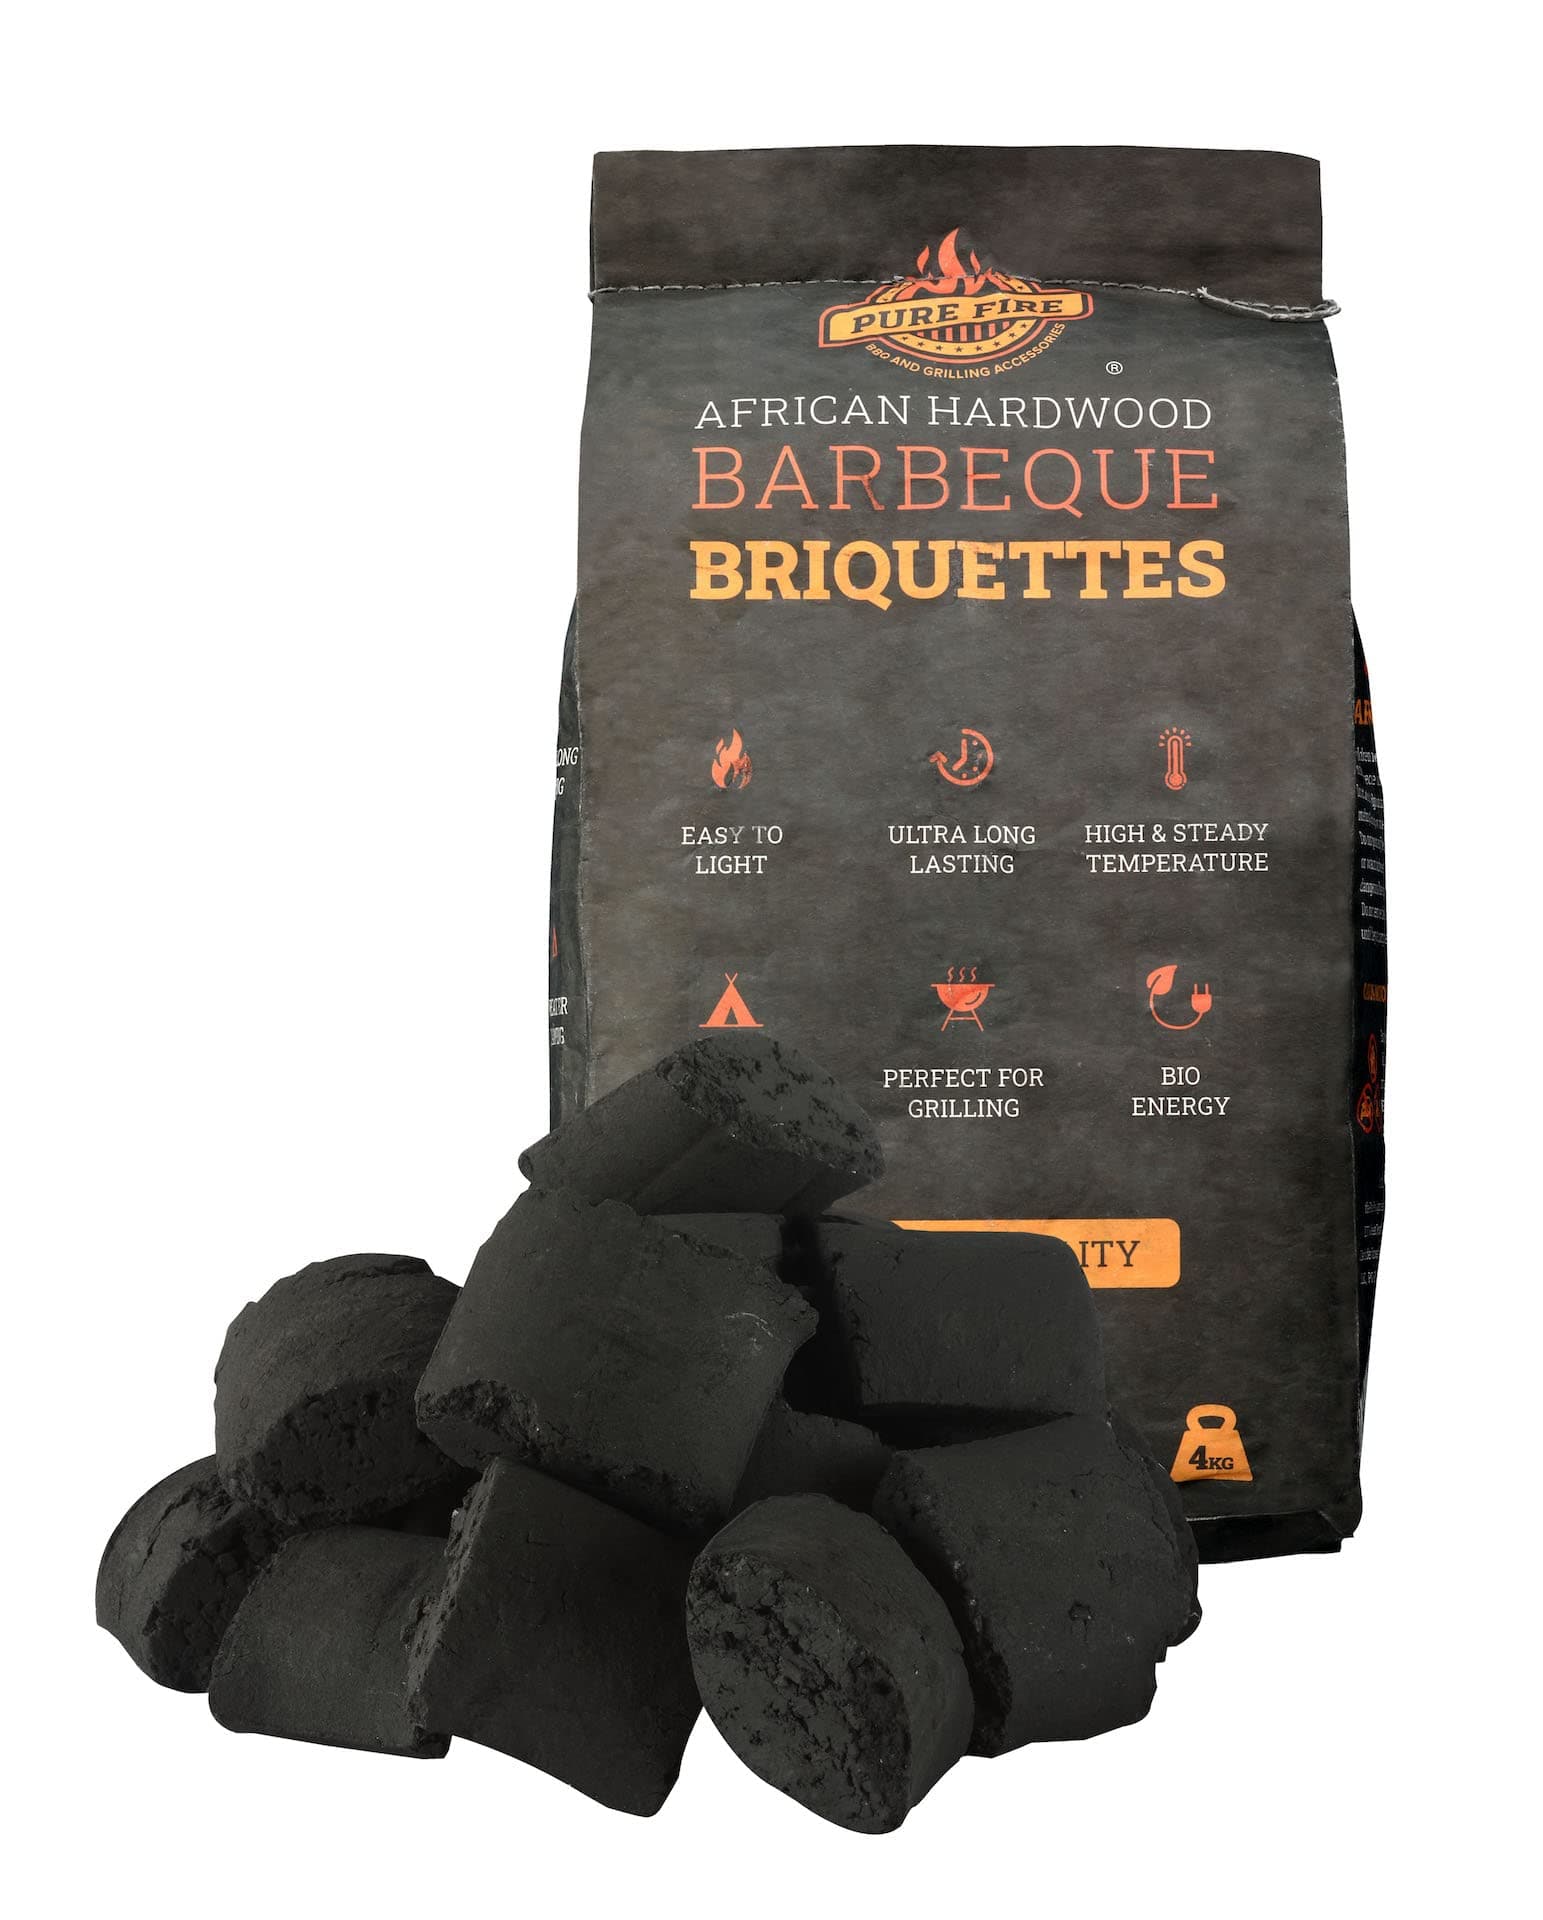 Shop for Purefire 4KG Briquettes on outback.ae